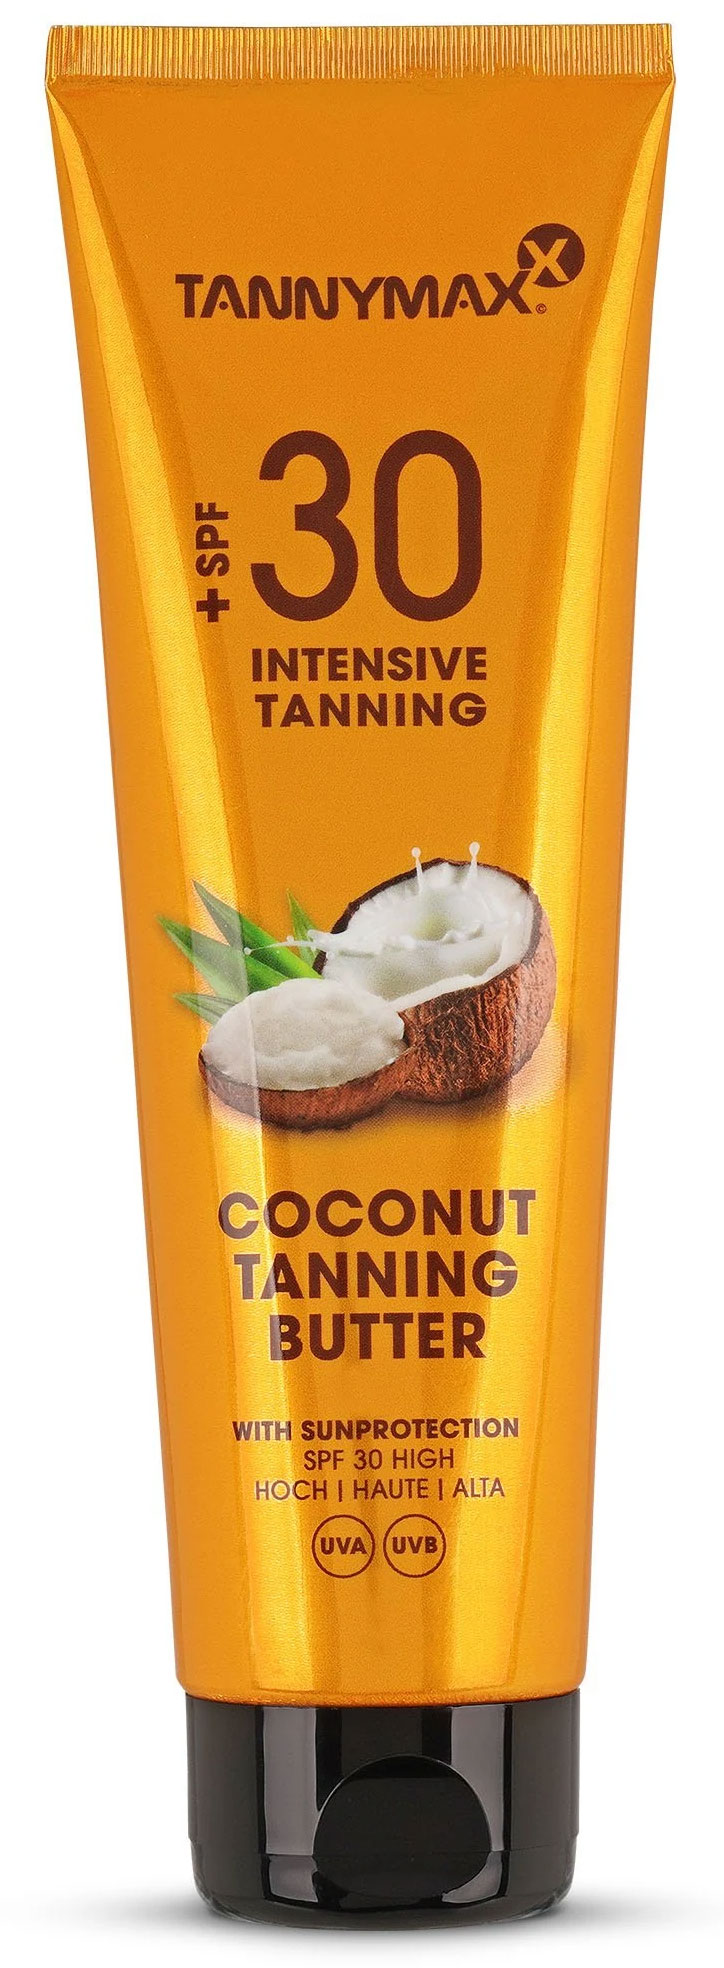 Tannymaxx Coconut SPF 30 / LSF 30 Tanning Butter Reichhaltige Kokosnussbutter 2902010000 width=